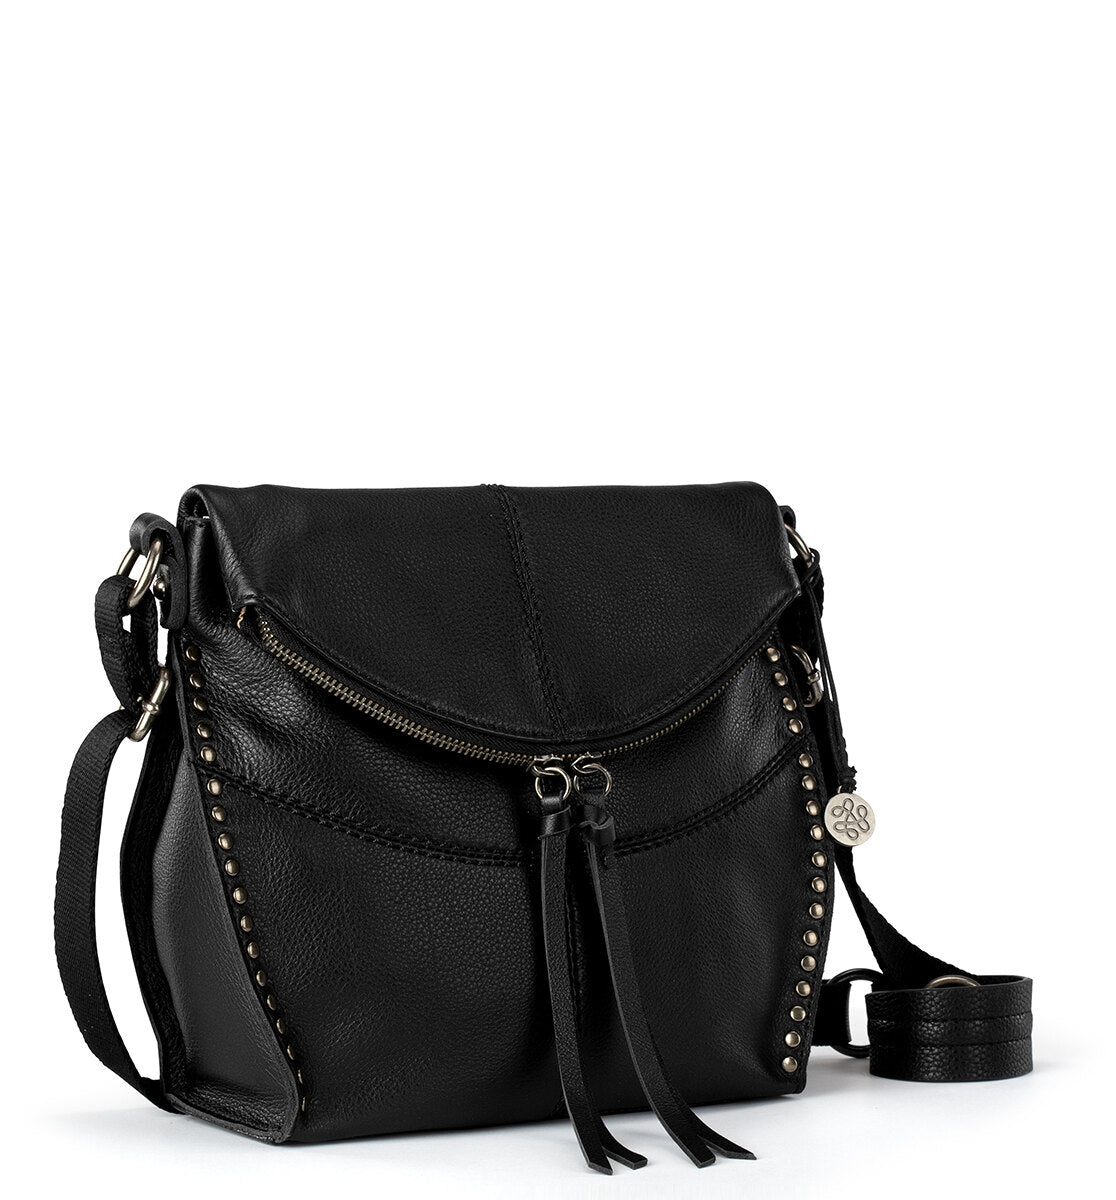 Brown The Sak handbag. Medium size. | The sak handbags, Cross shoulder bags,  Handbag